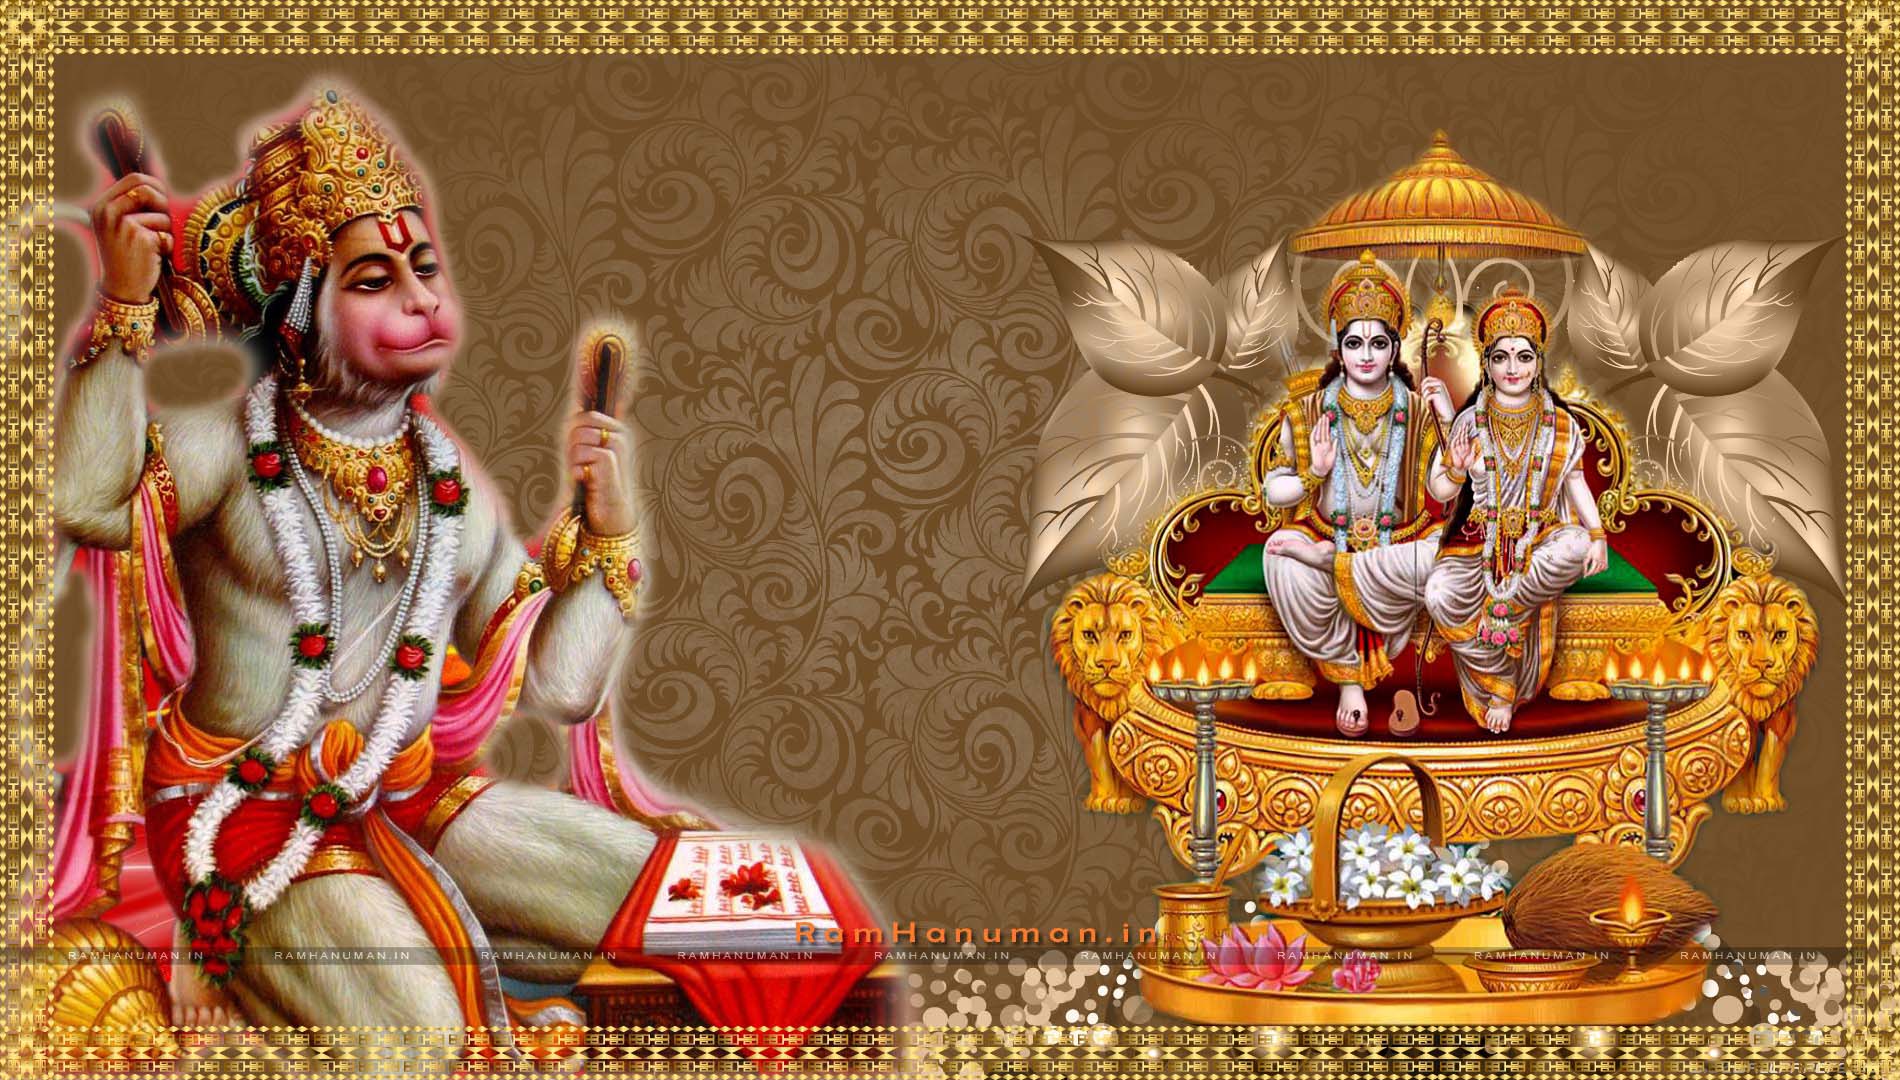 Best Hanuman Image HD. Picture Free Download